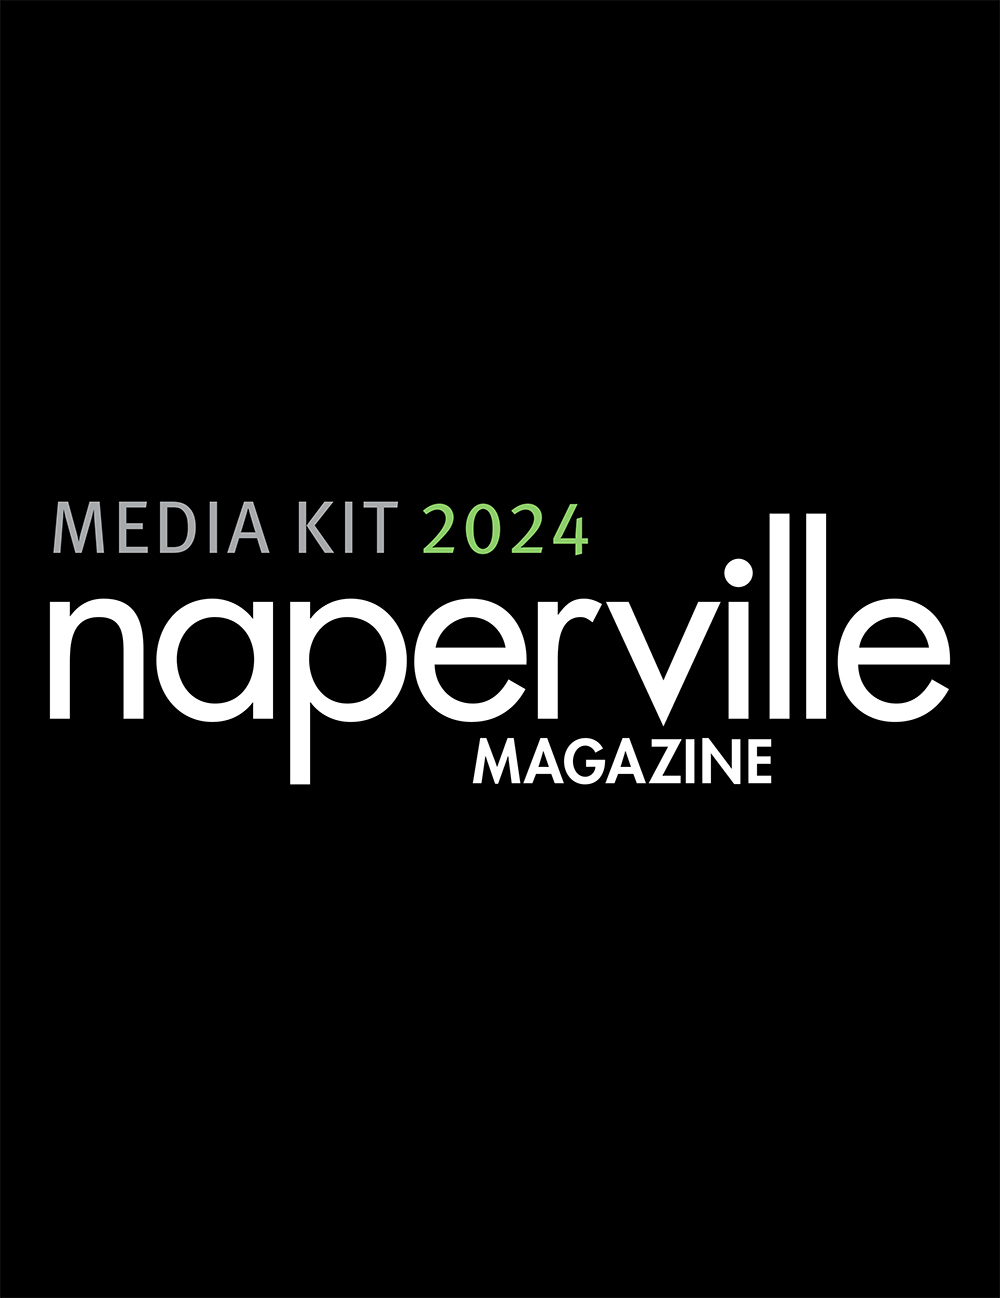 Naperville magazine Media Kit 2024